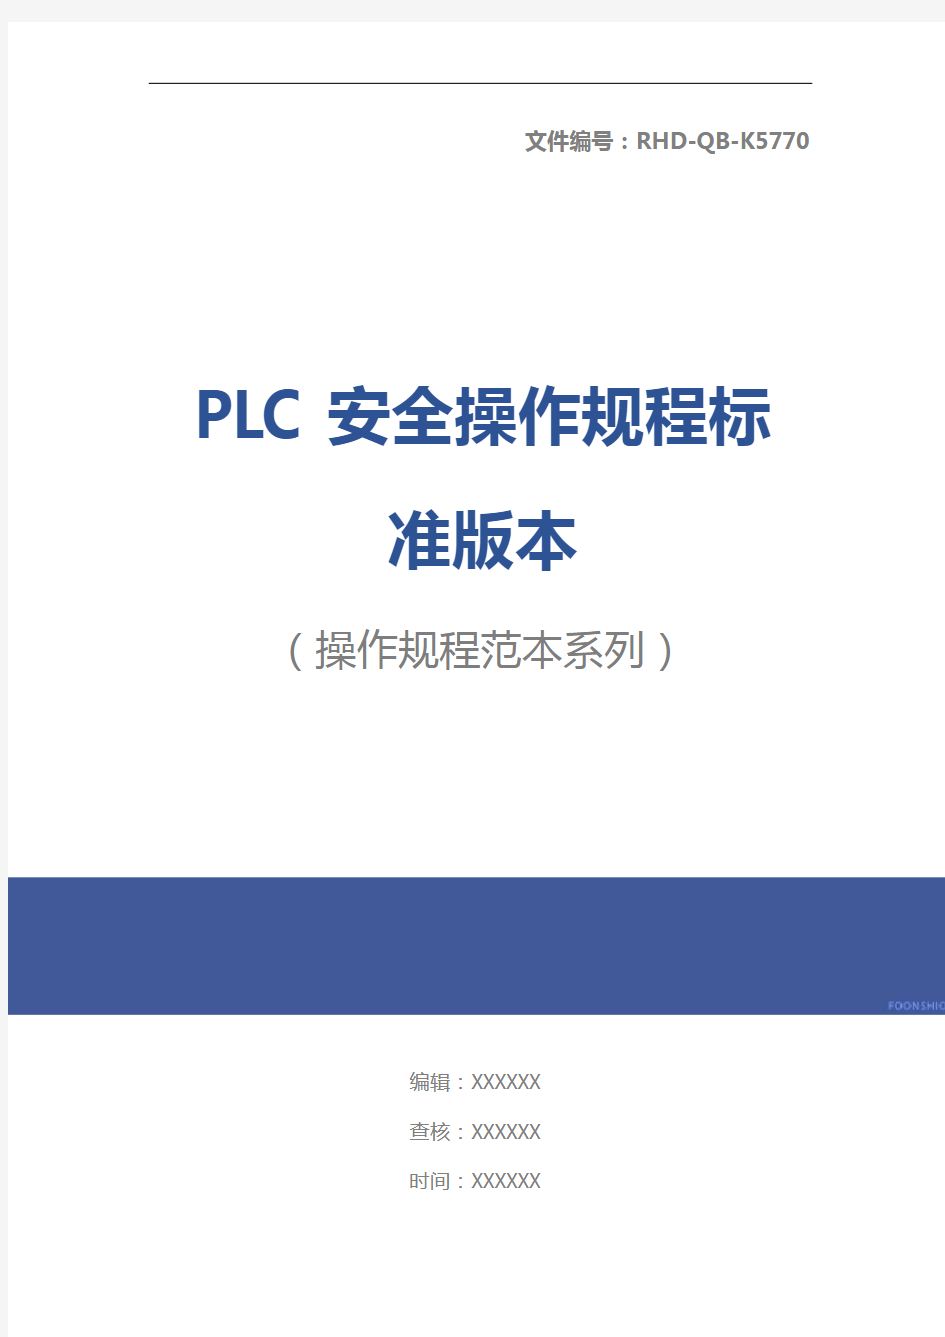 PLC安全操作规程标准版本